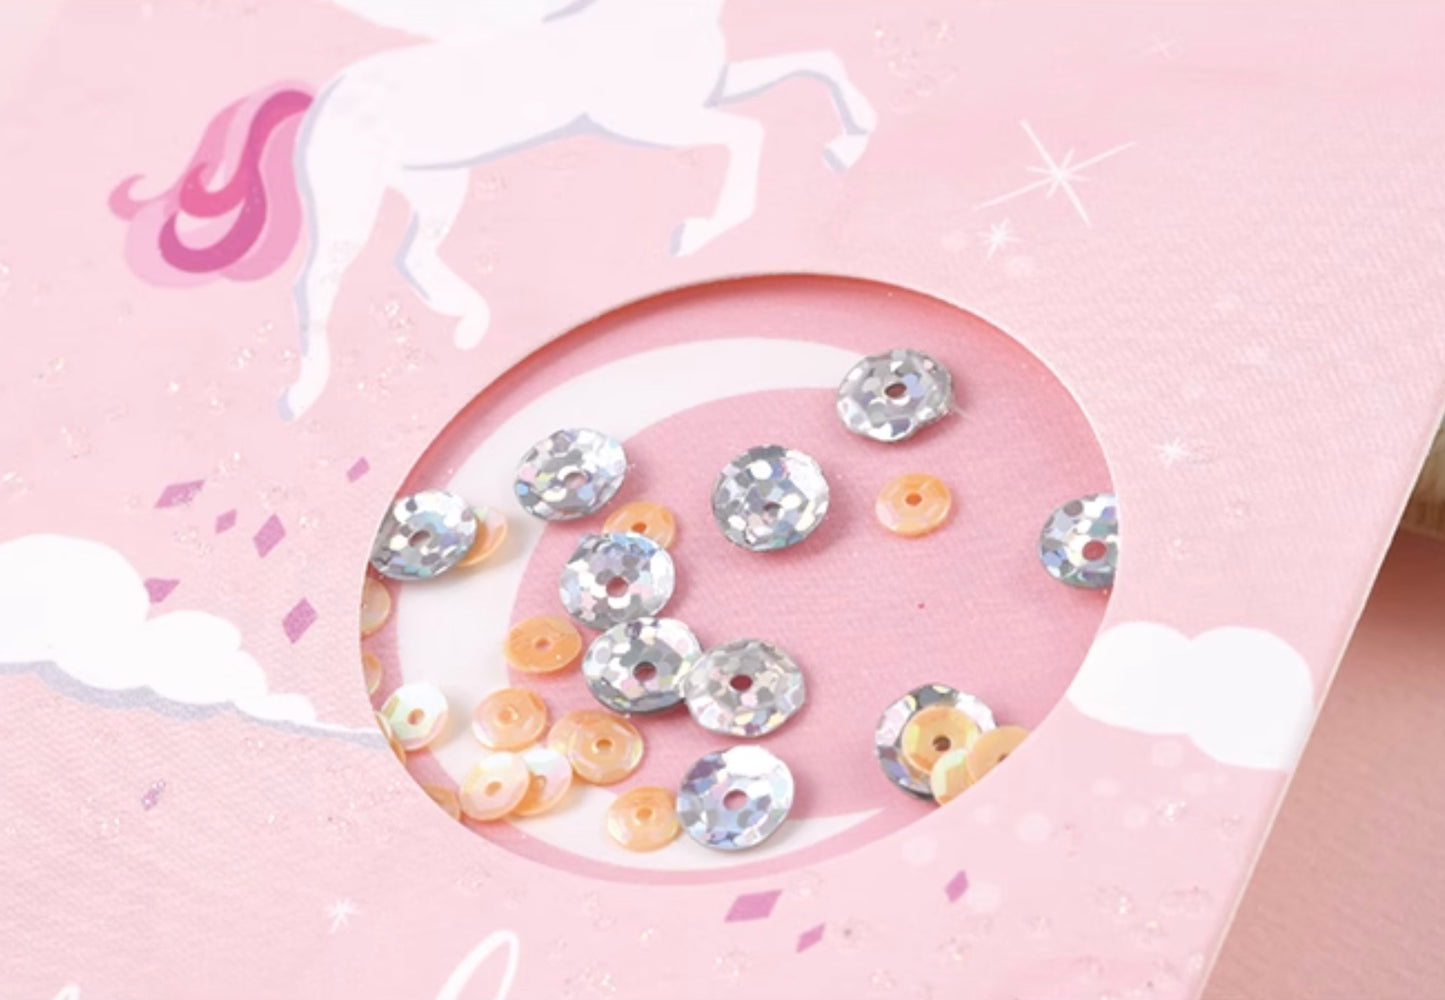 Unicorn sparkly Birthday Card, pink with sequins, Medium, set of 5pcs